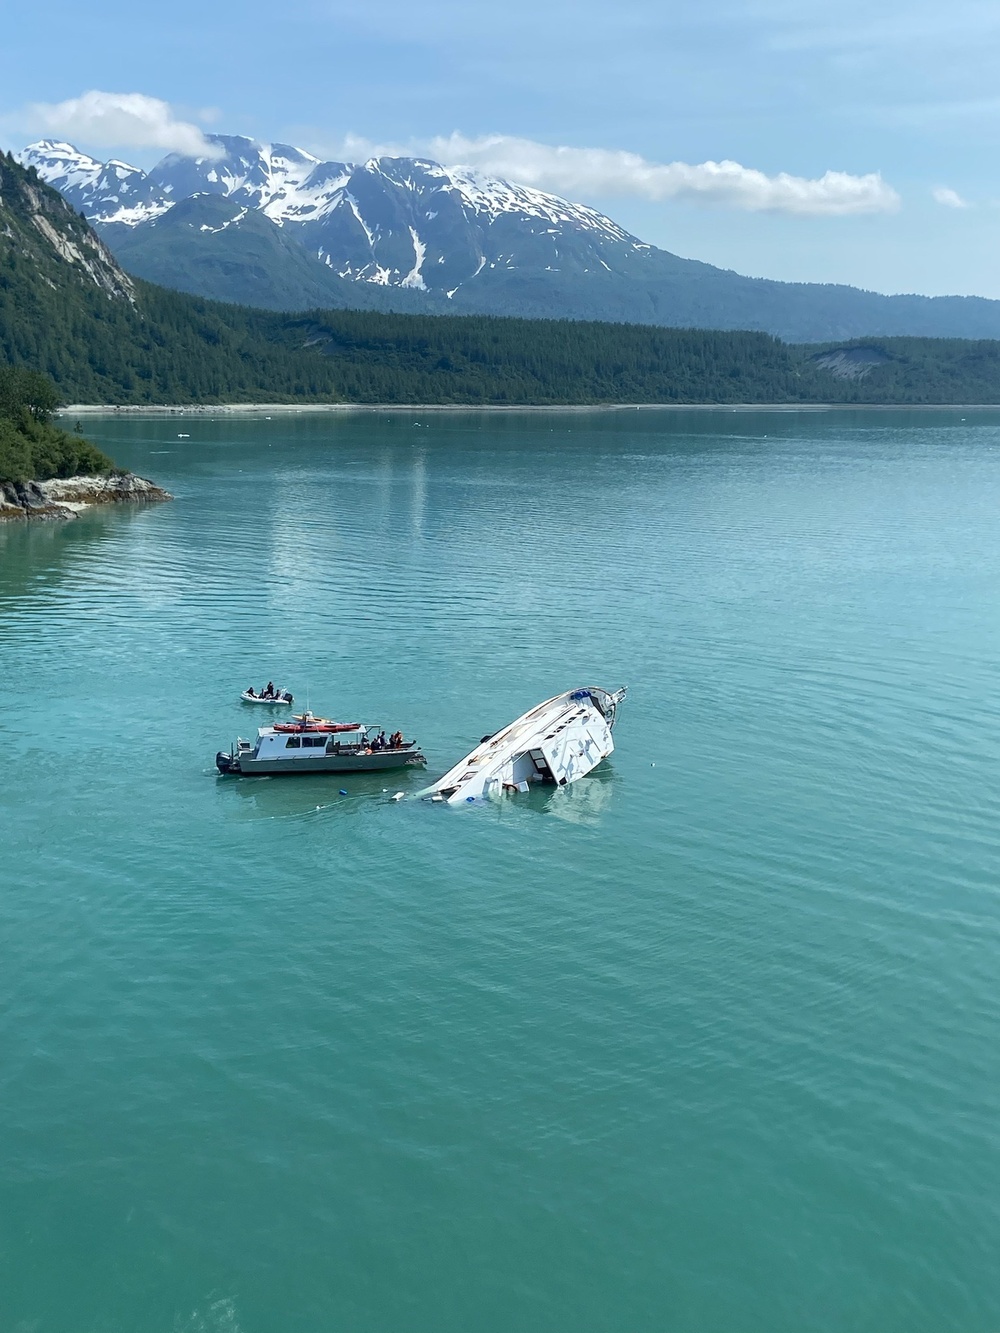 Coast Guard, good Samaritan rescue 4 from capsized boat in Glacier Bay National Park, Alaska